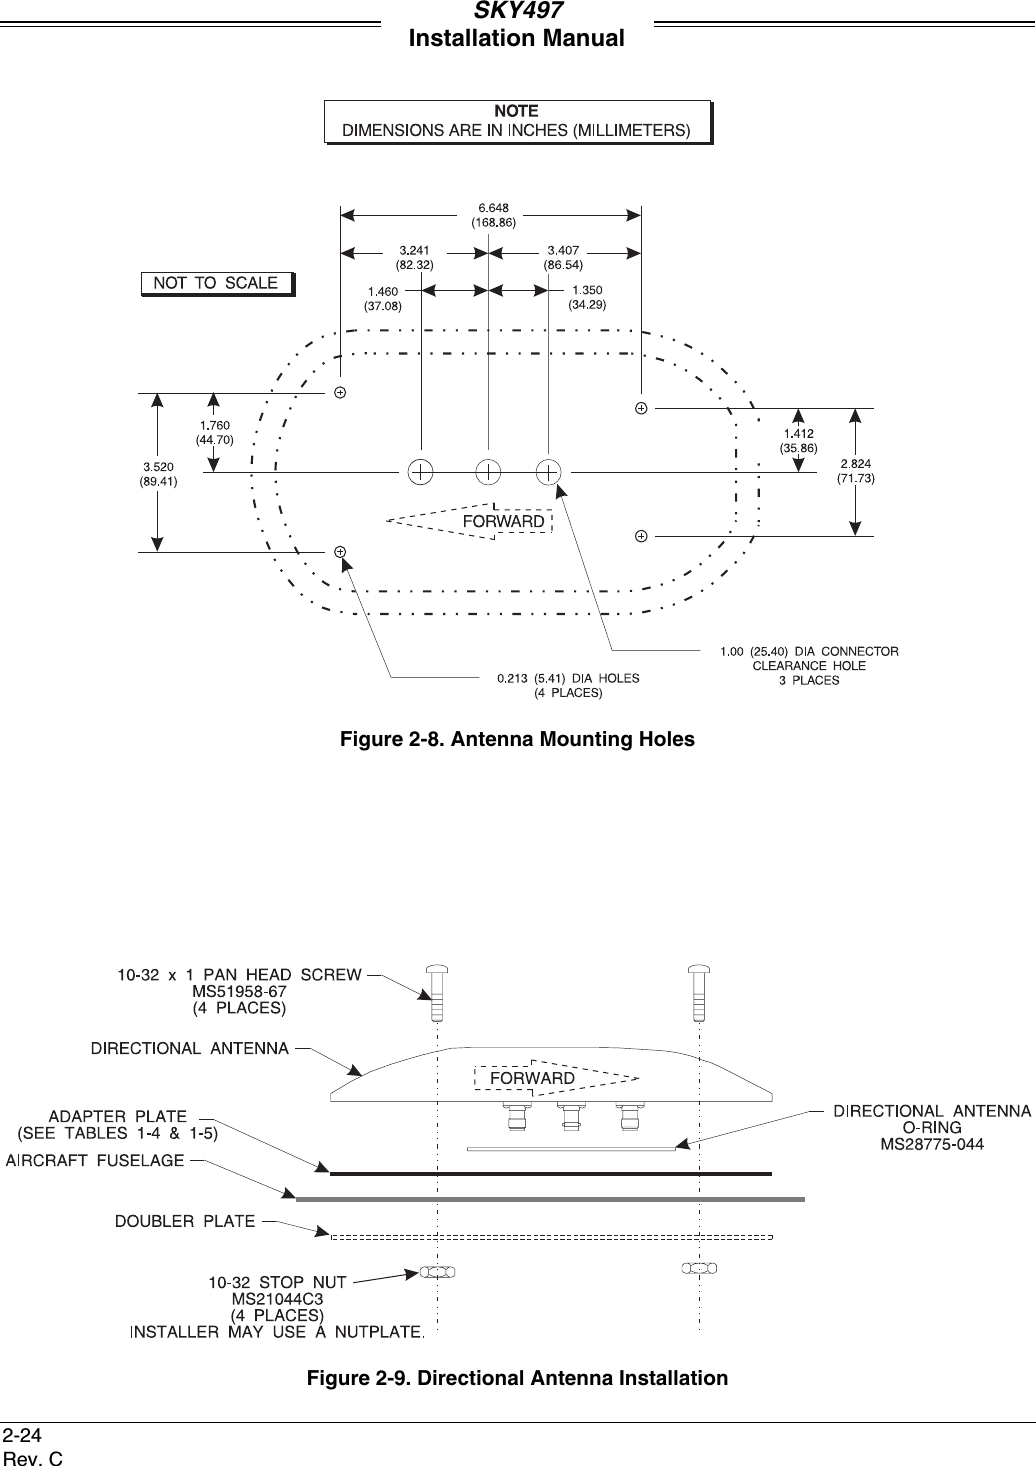 SKY497Installation Manual2-24Rev. CFigure 2-8. Antenna Mounting HolesFigure 2-9. Directional Antenna Installation